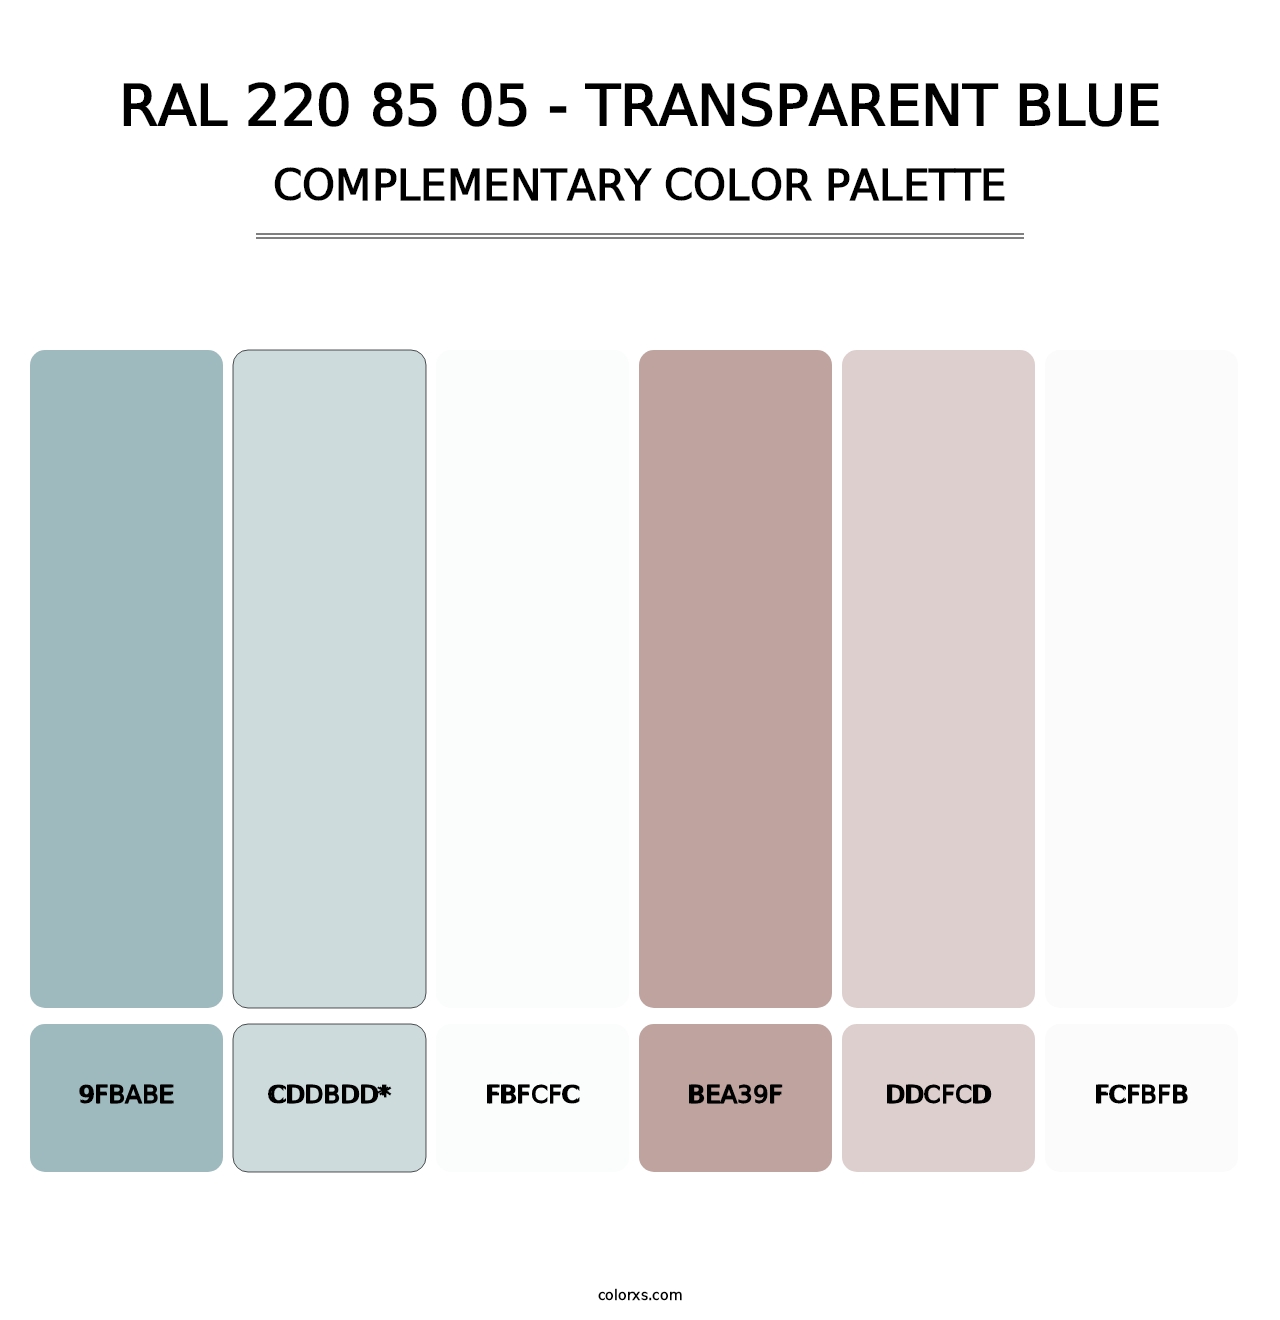 RAL 220 85 05 - Transparent Blue - Complementary Color Palette